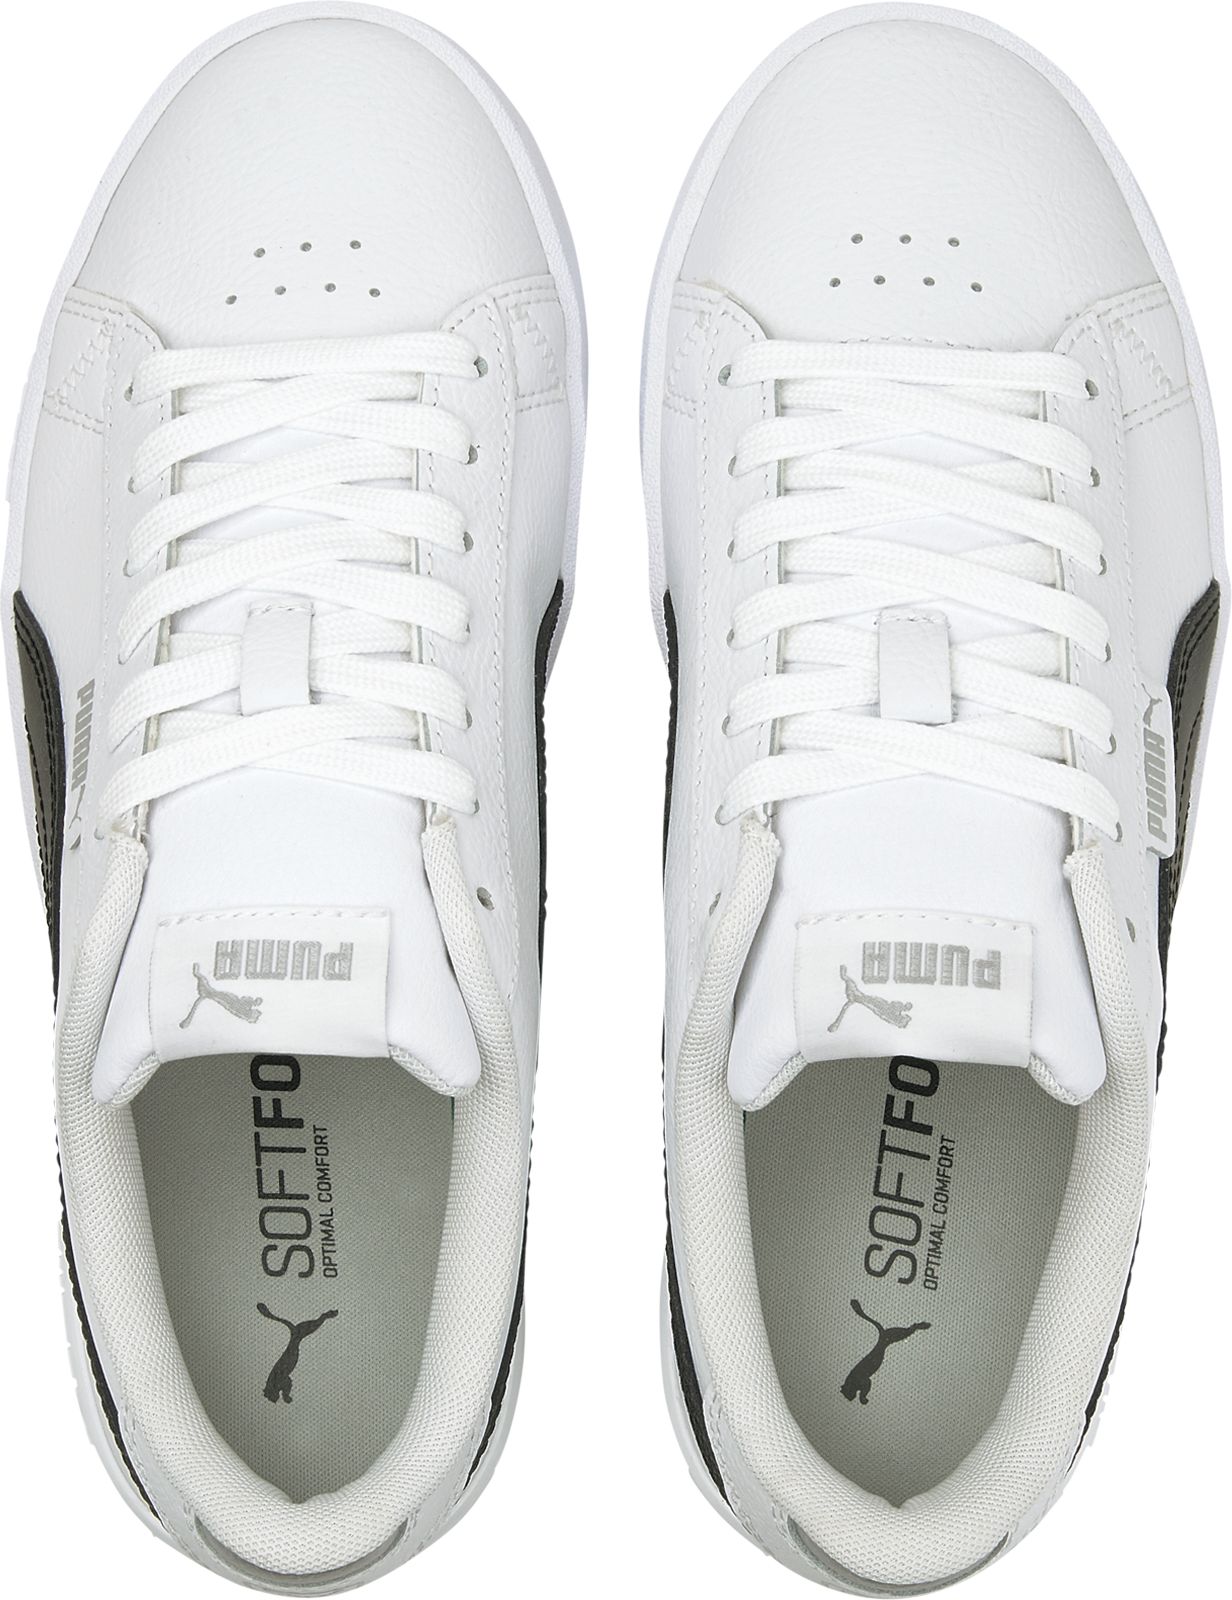 Puma Shoes Jada White Black